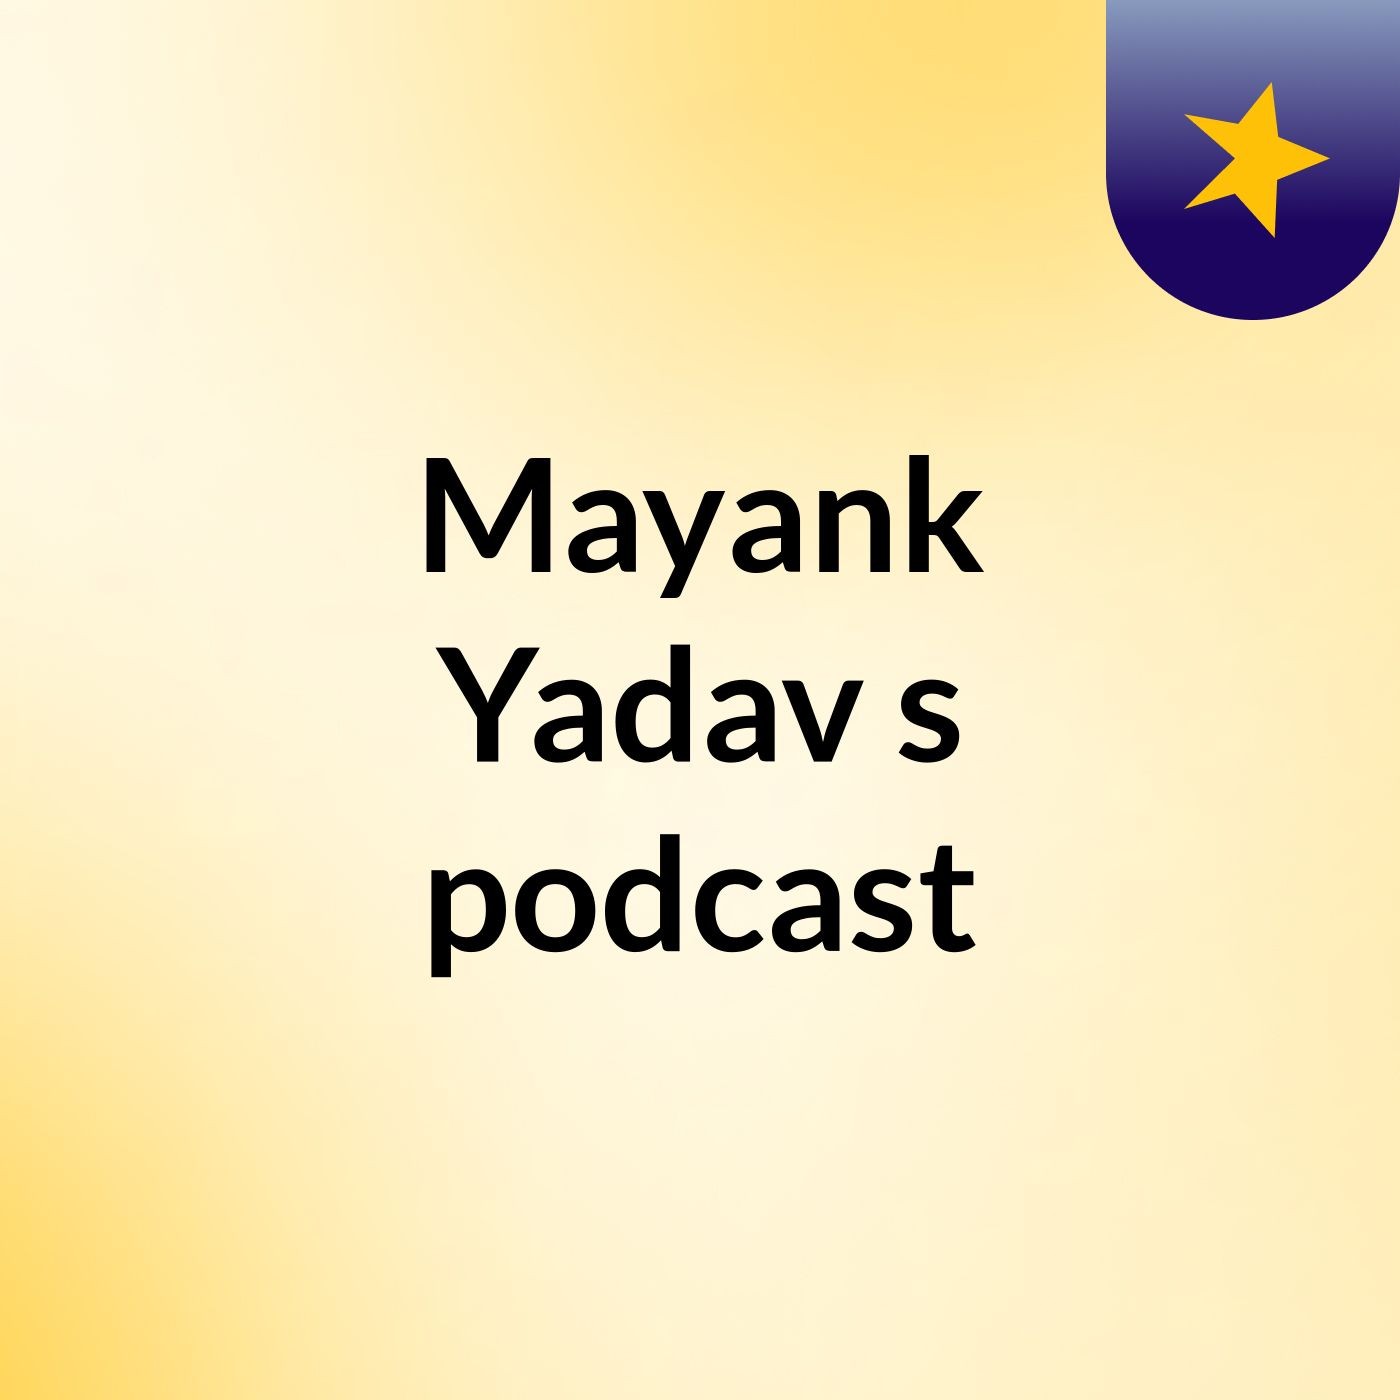 Episode 2 - Mayank Yadav's podcast